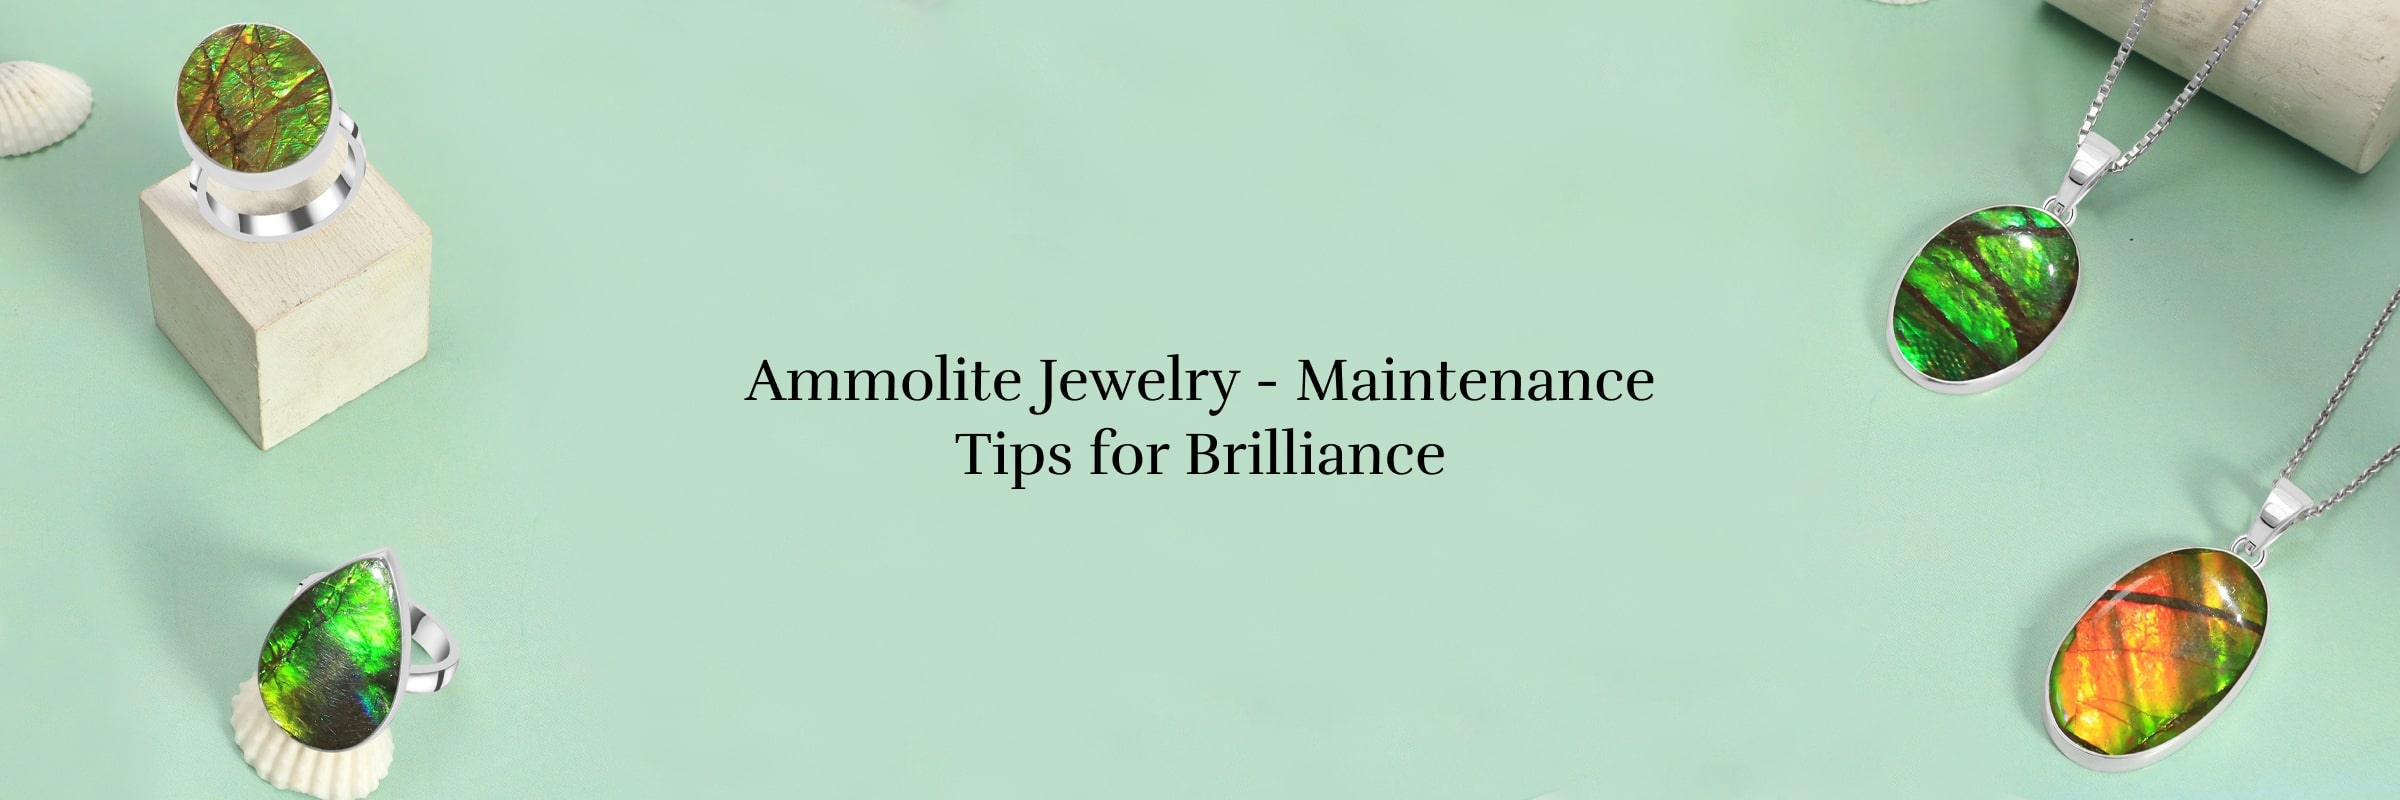 Care and Maintenance of Ammolite Jewelry